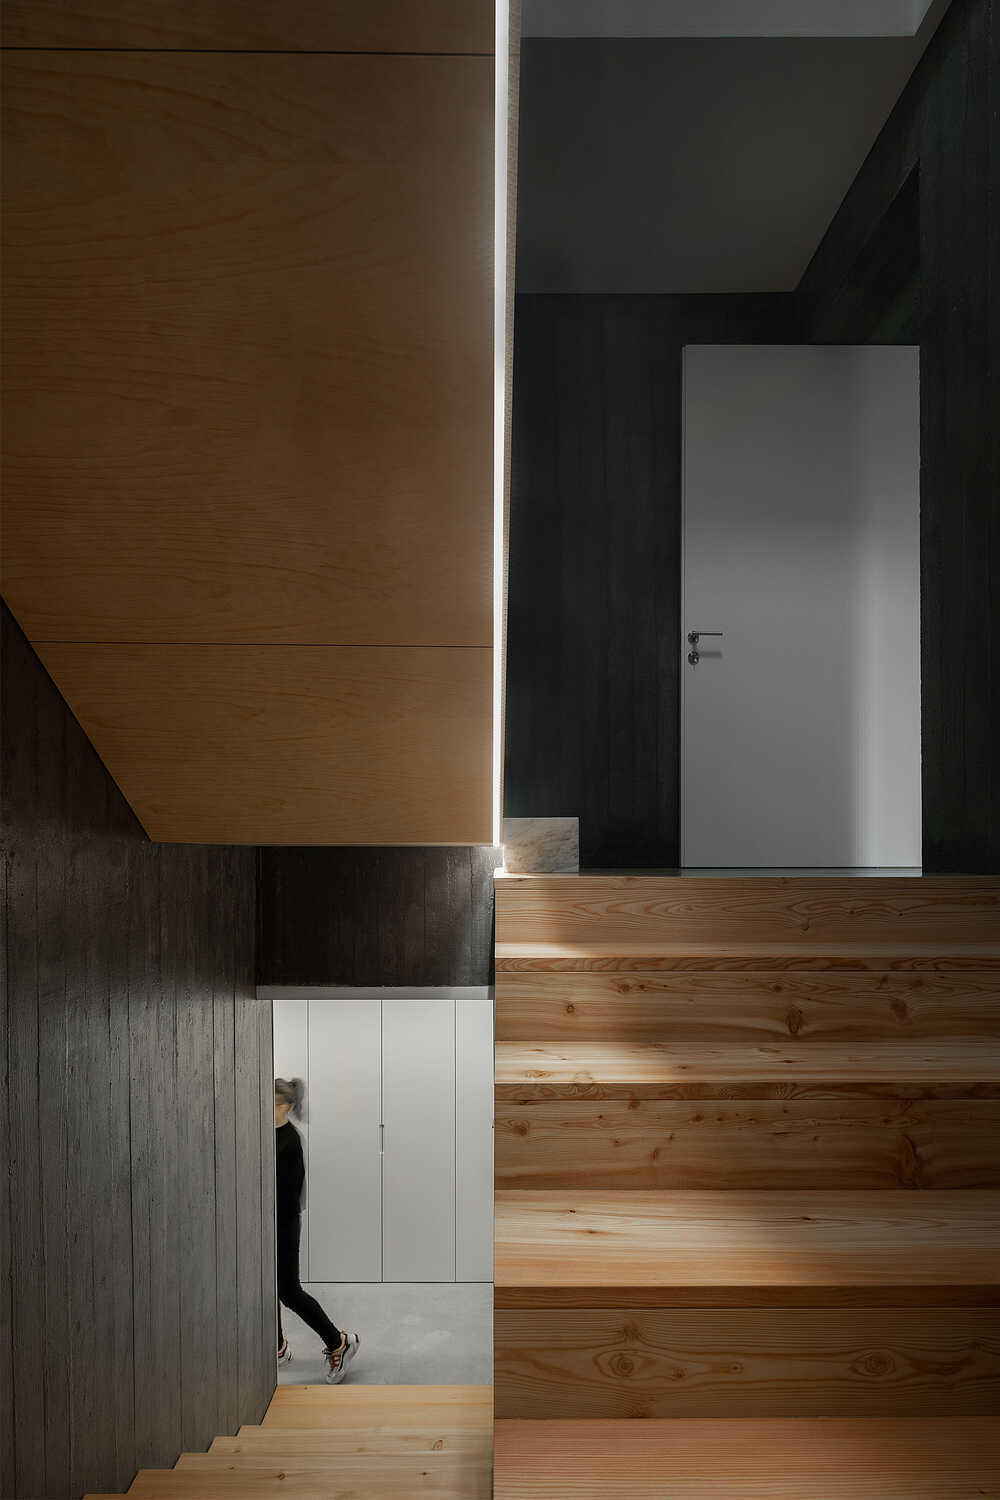 House CG by Pedro Henrique Arquitecto